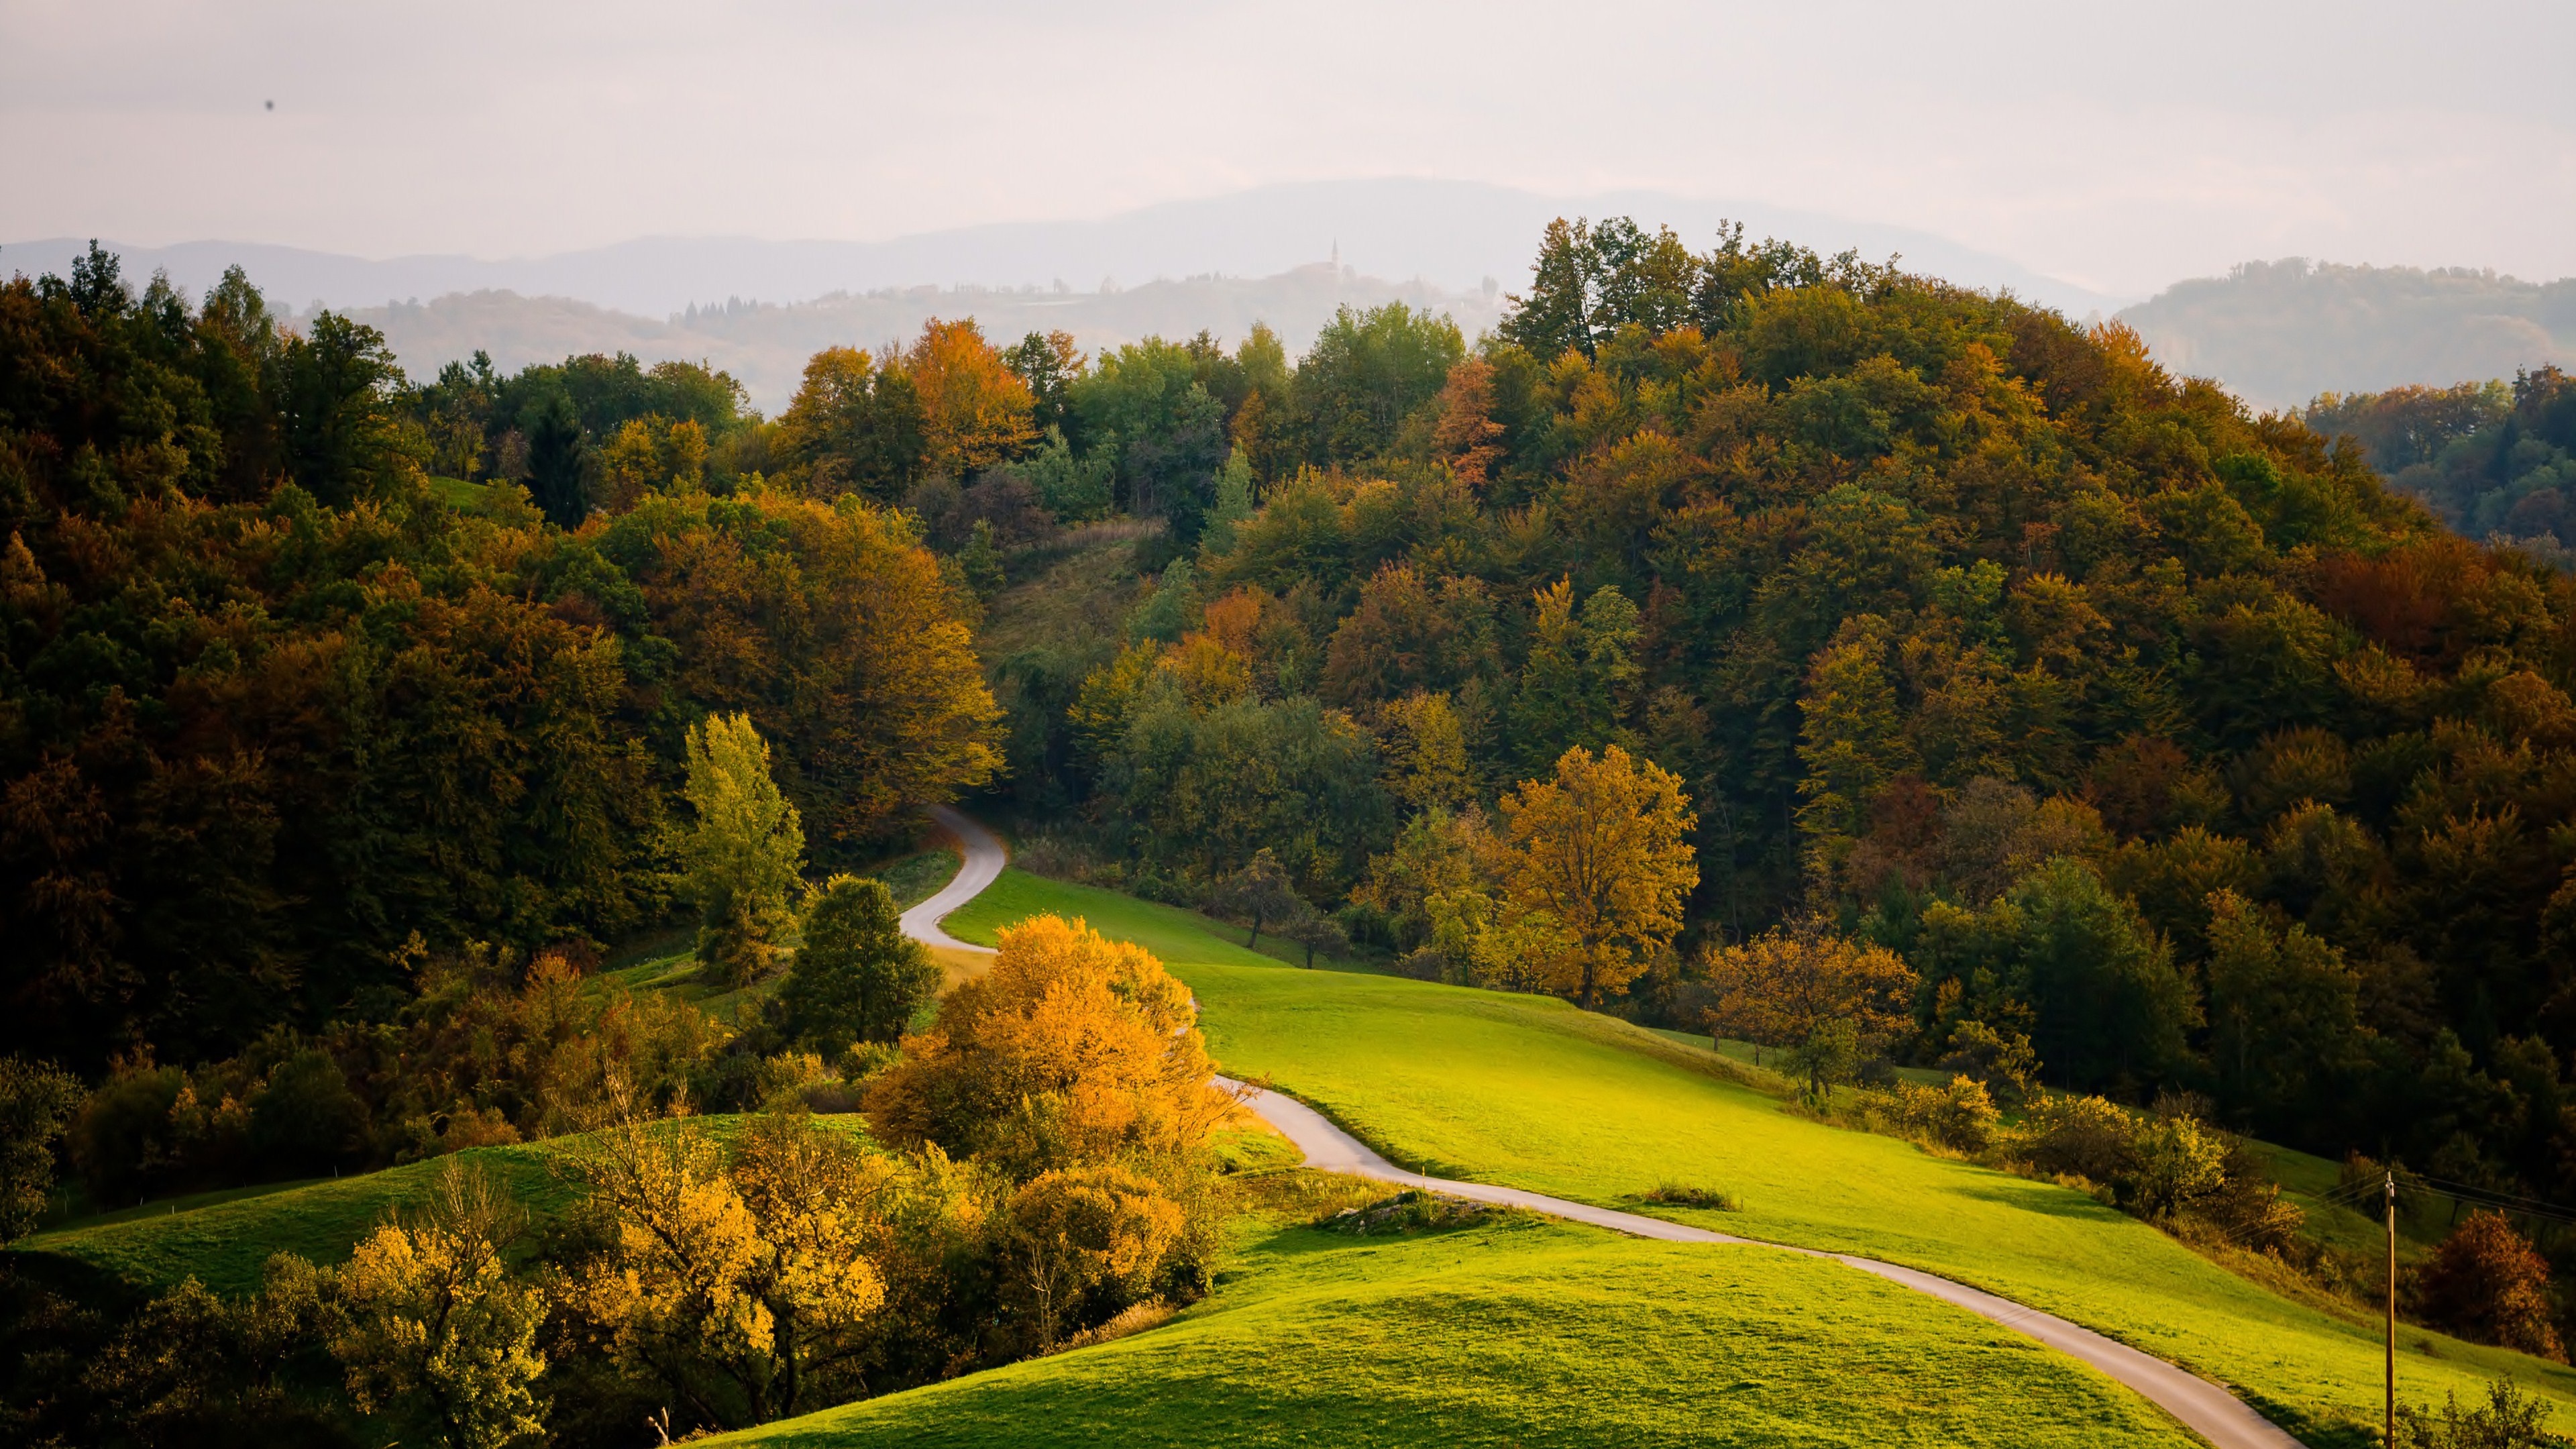 Lush foliage, Autumn equinox, Pumpkin patches, Hay rides, Scenic overlook, 3840x2160 4K Desktop